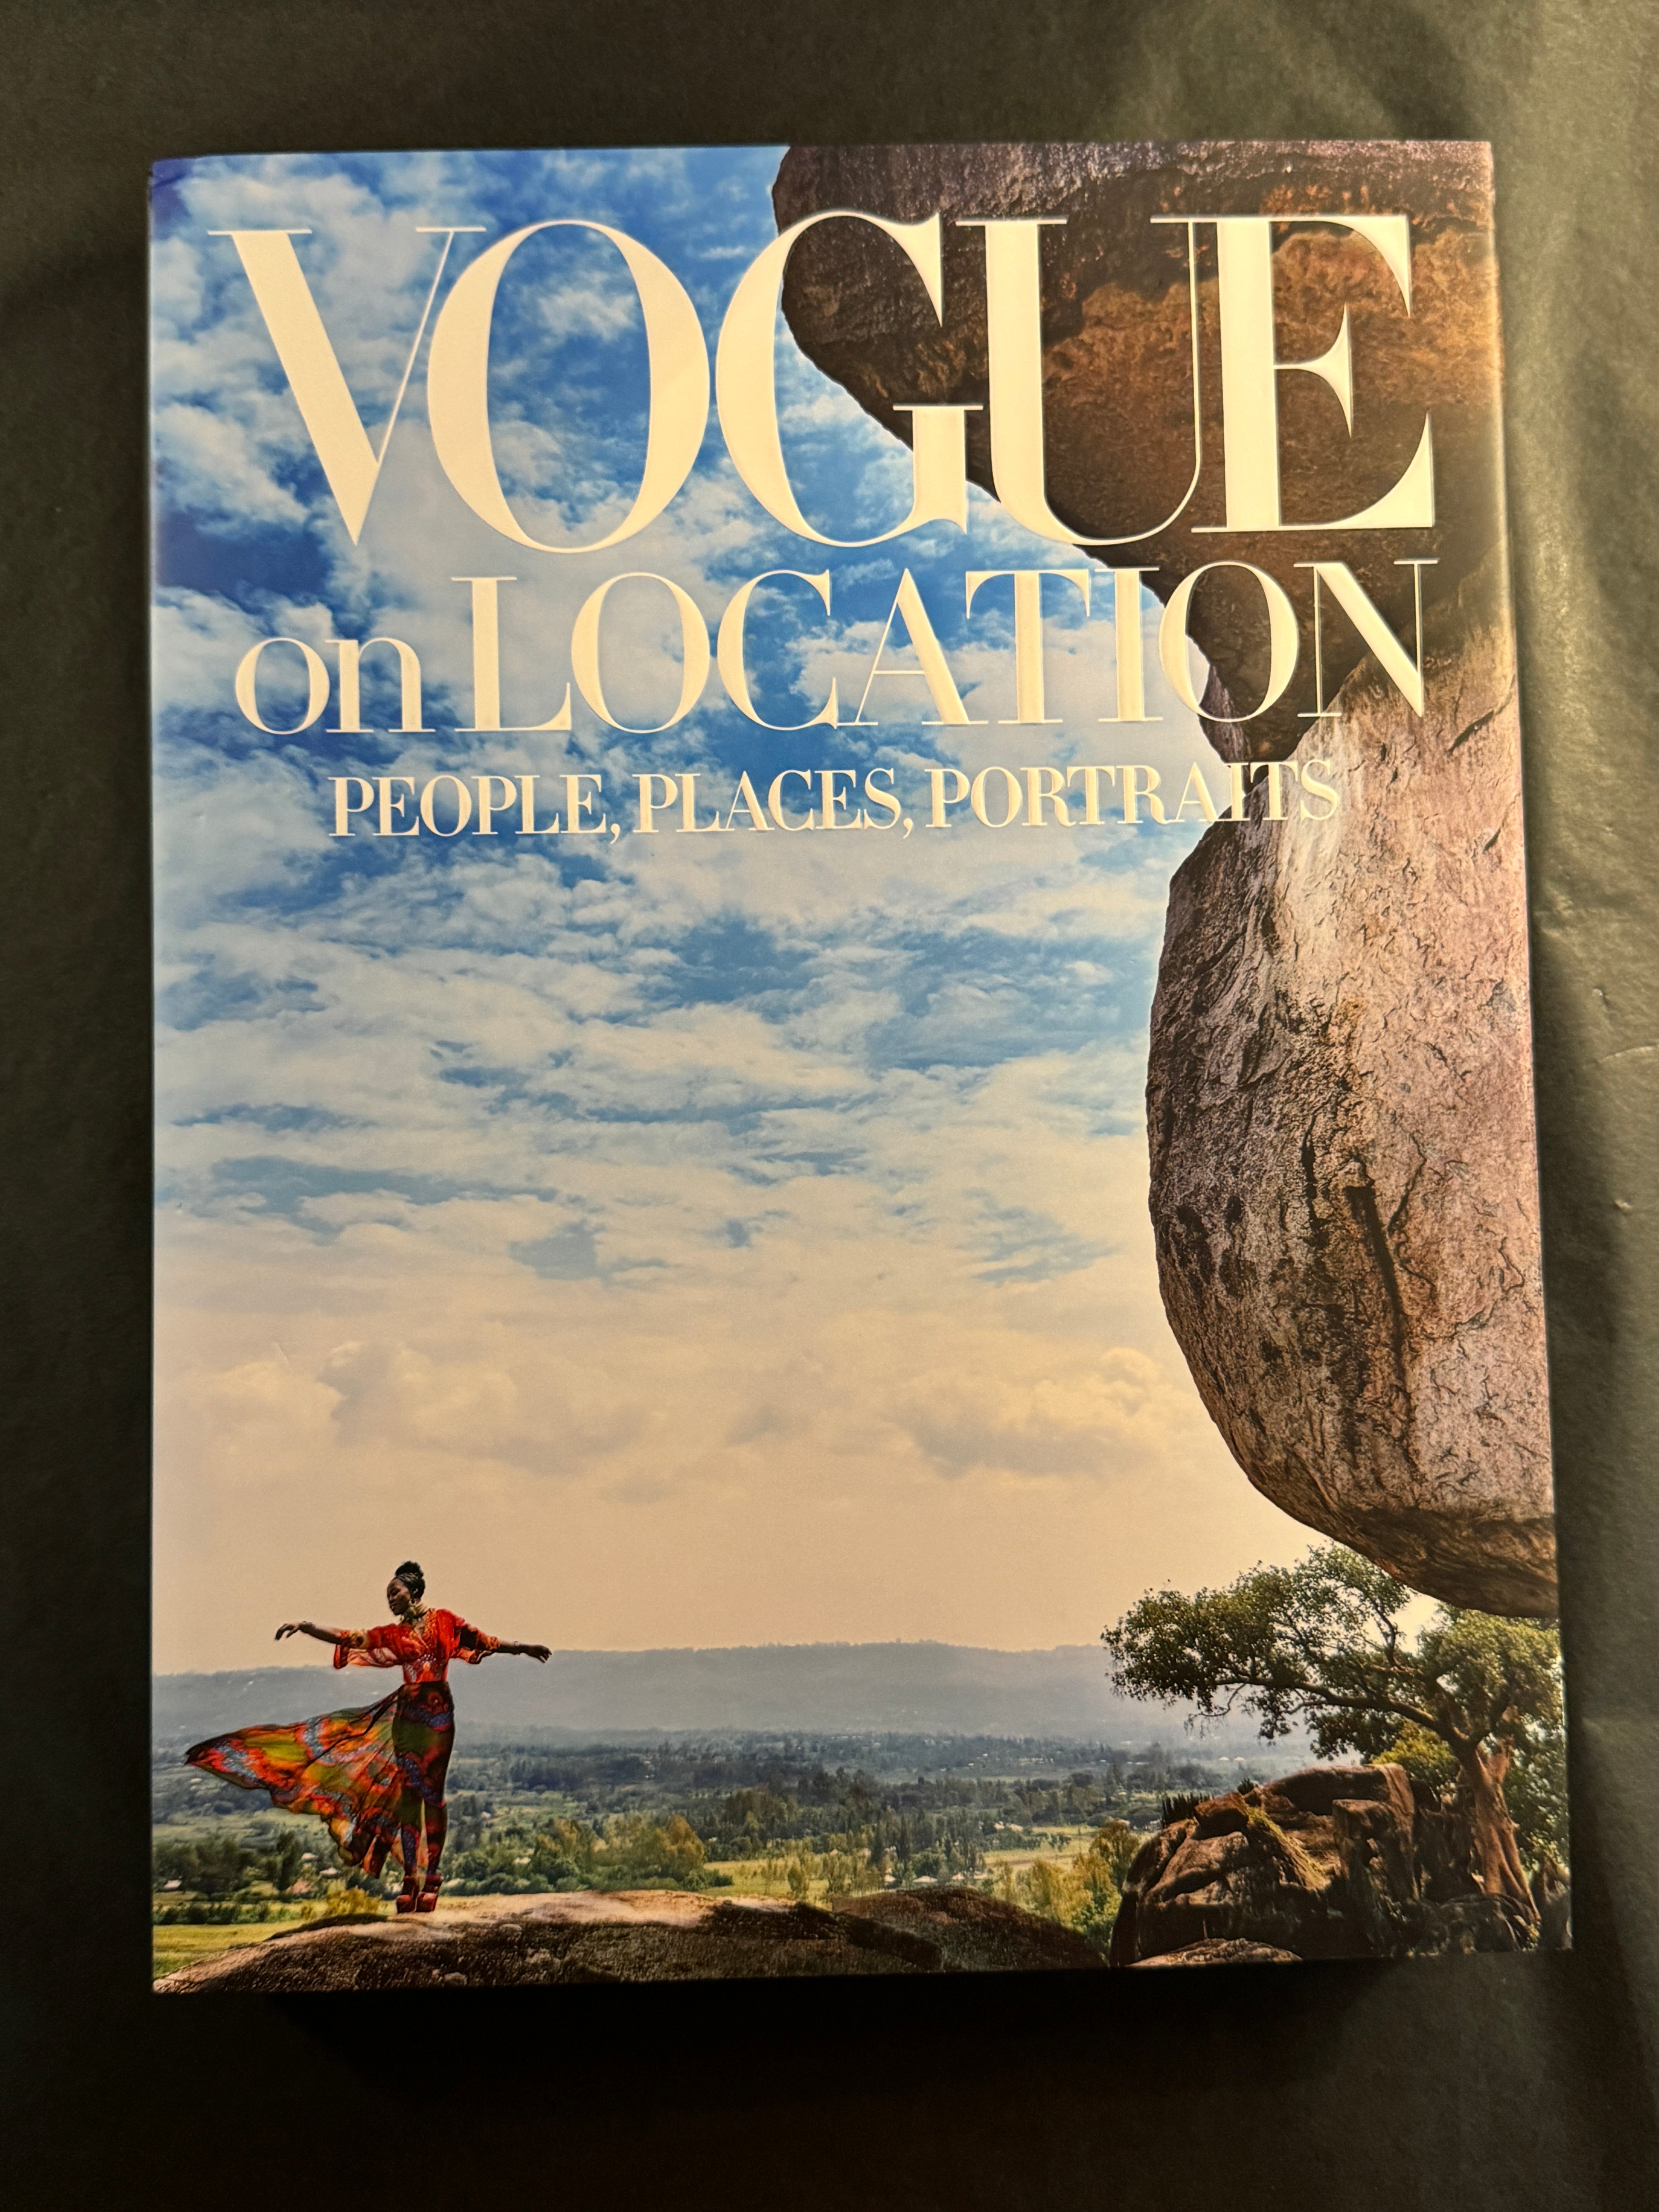 Vogue on Location - People, Places, Portraits